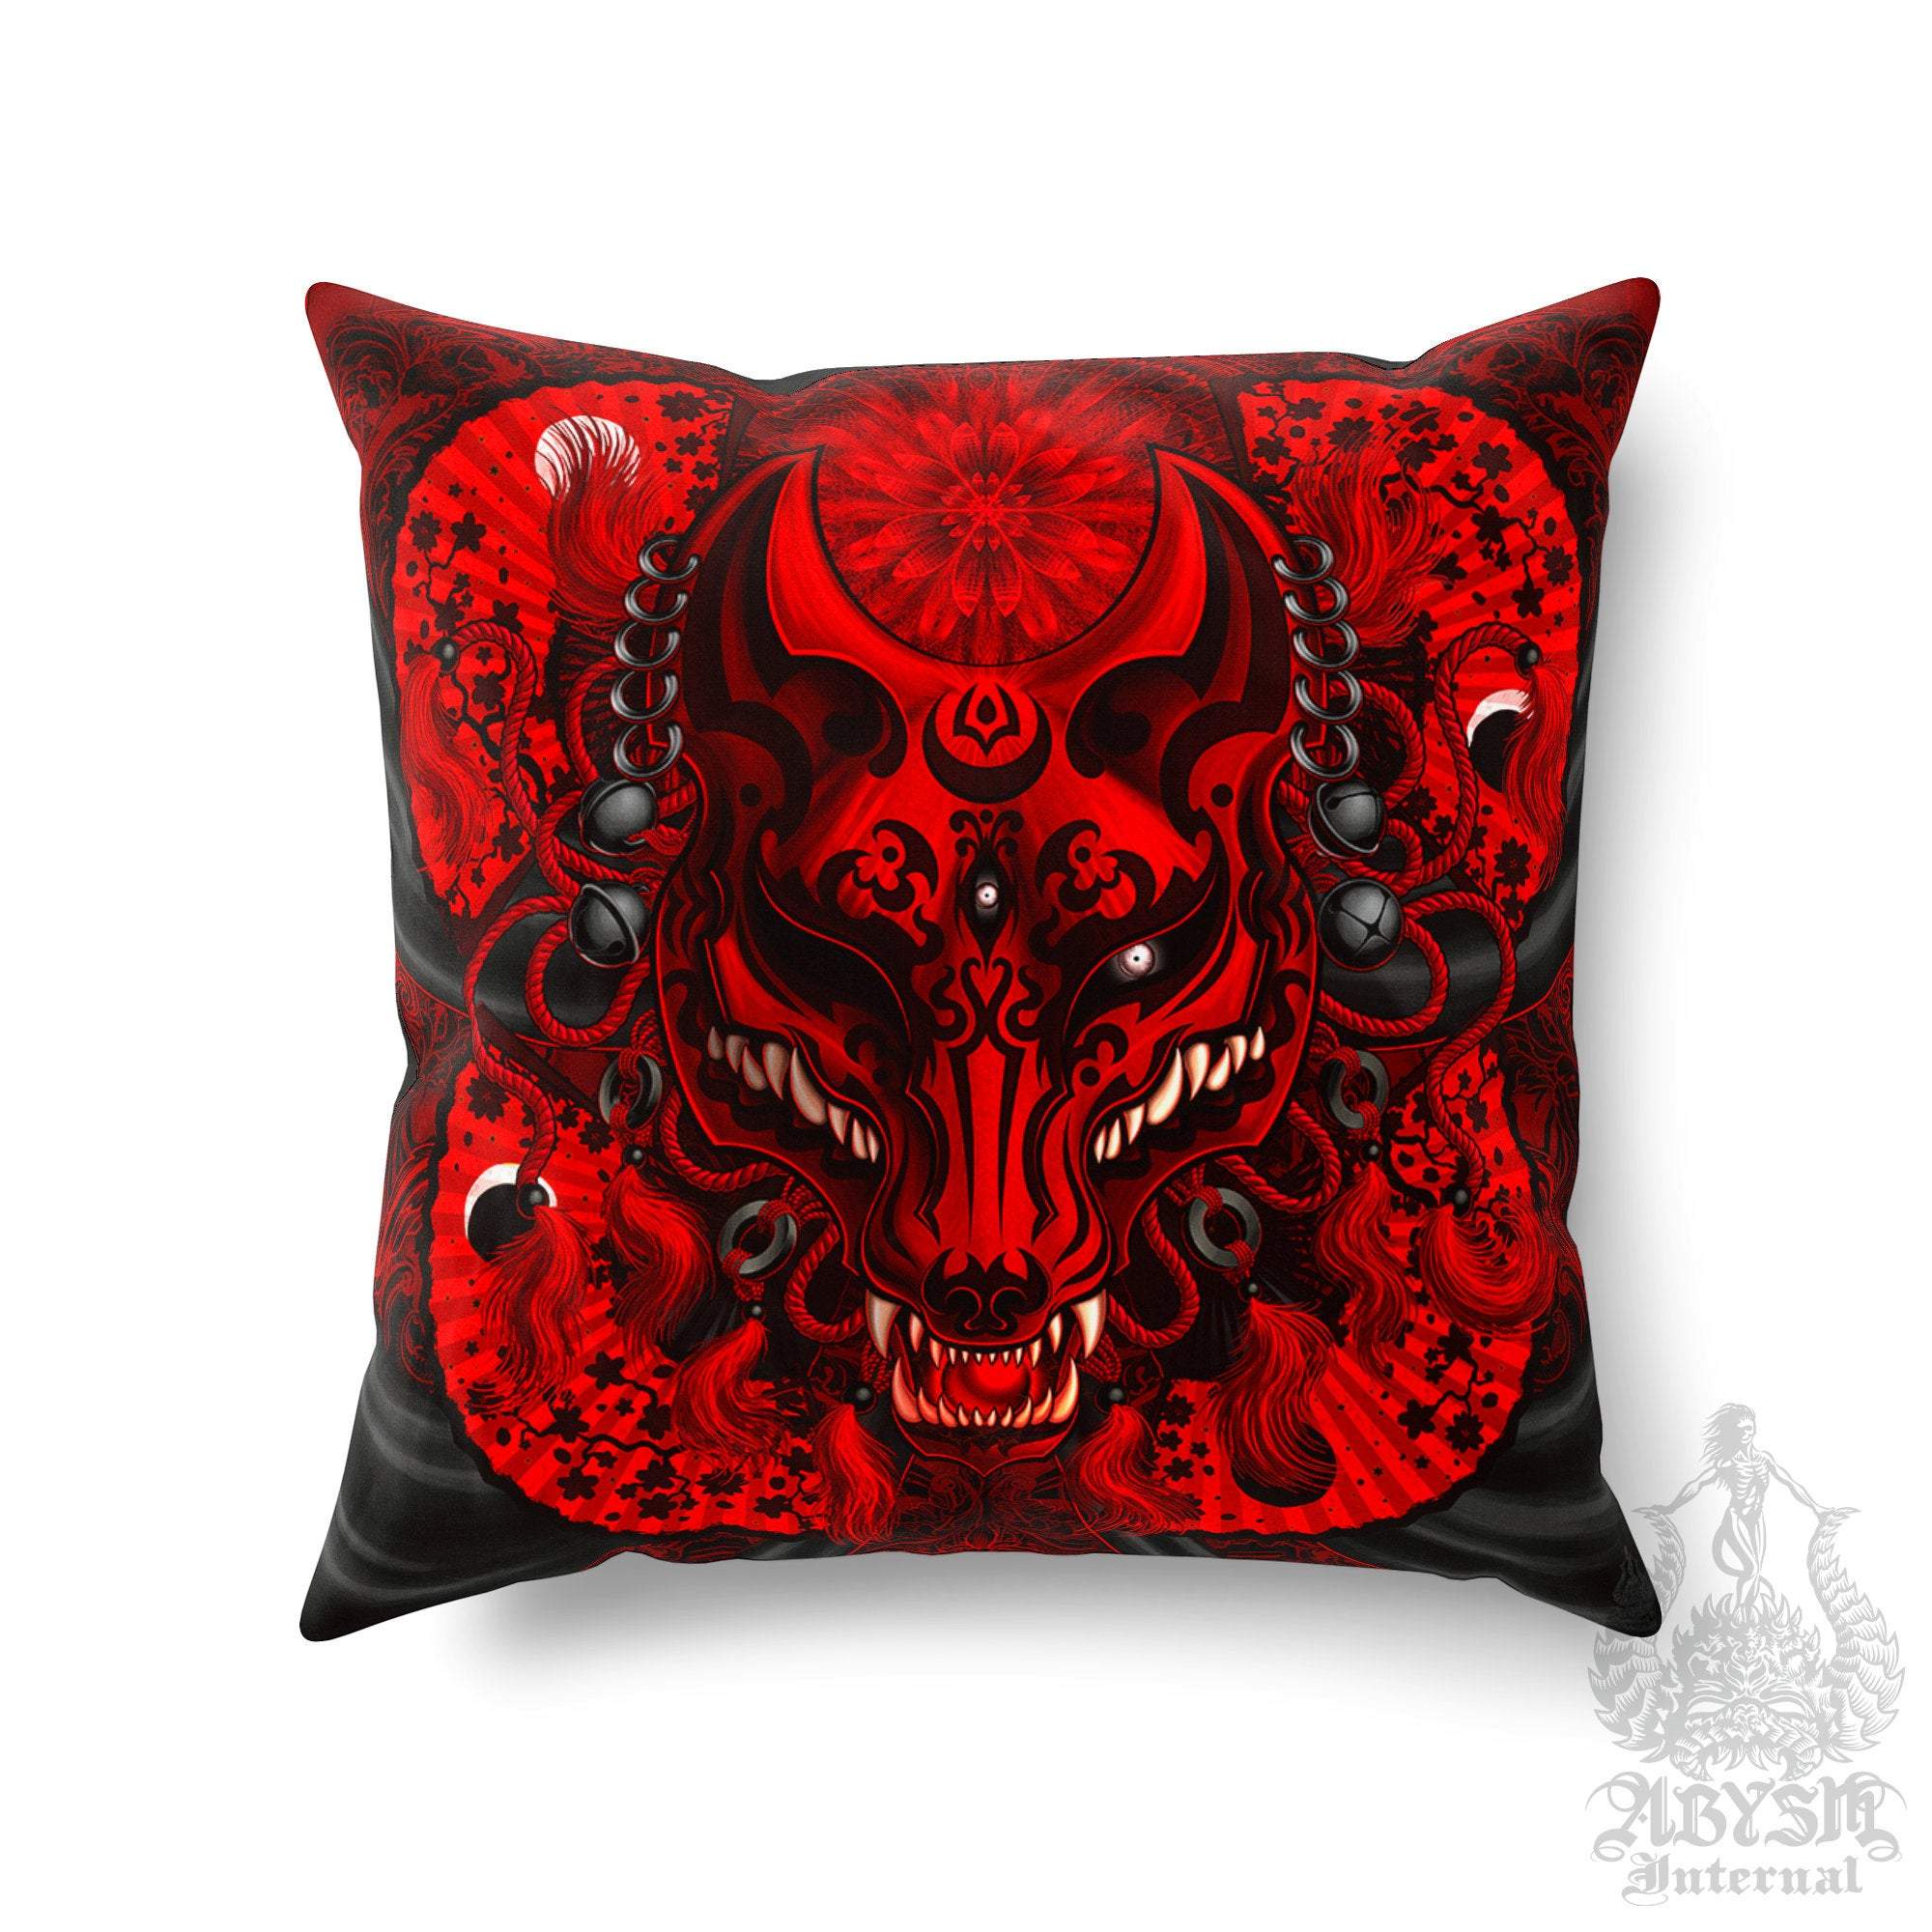 Kitsune Throw Pillow, Decorative Accent Cushion, Anime, Fox Mask, Okami, Japanese Art, Alternative Home - Bloody Red & Black - Abysm Internal